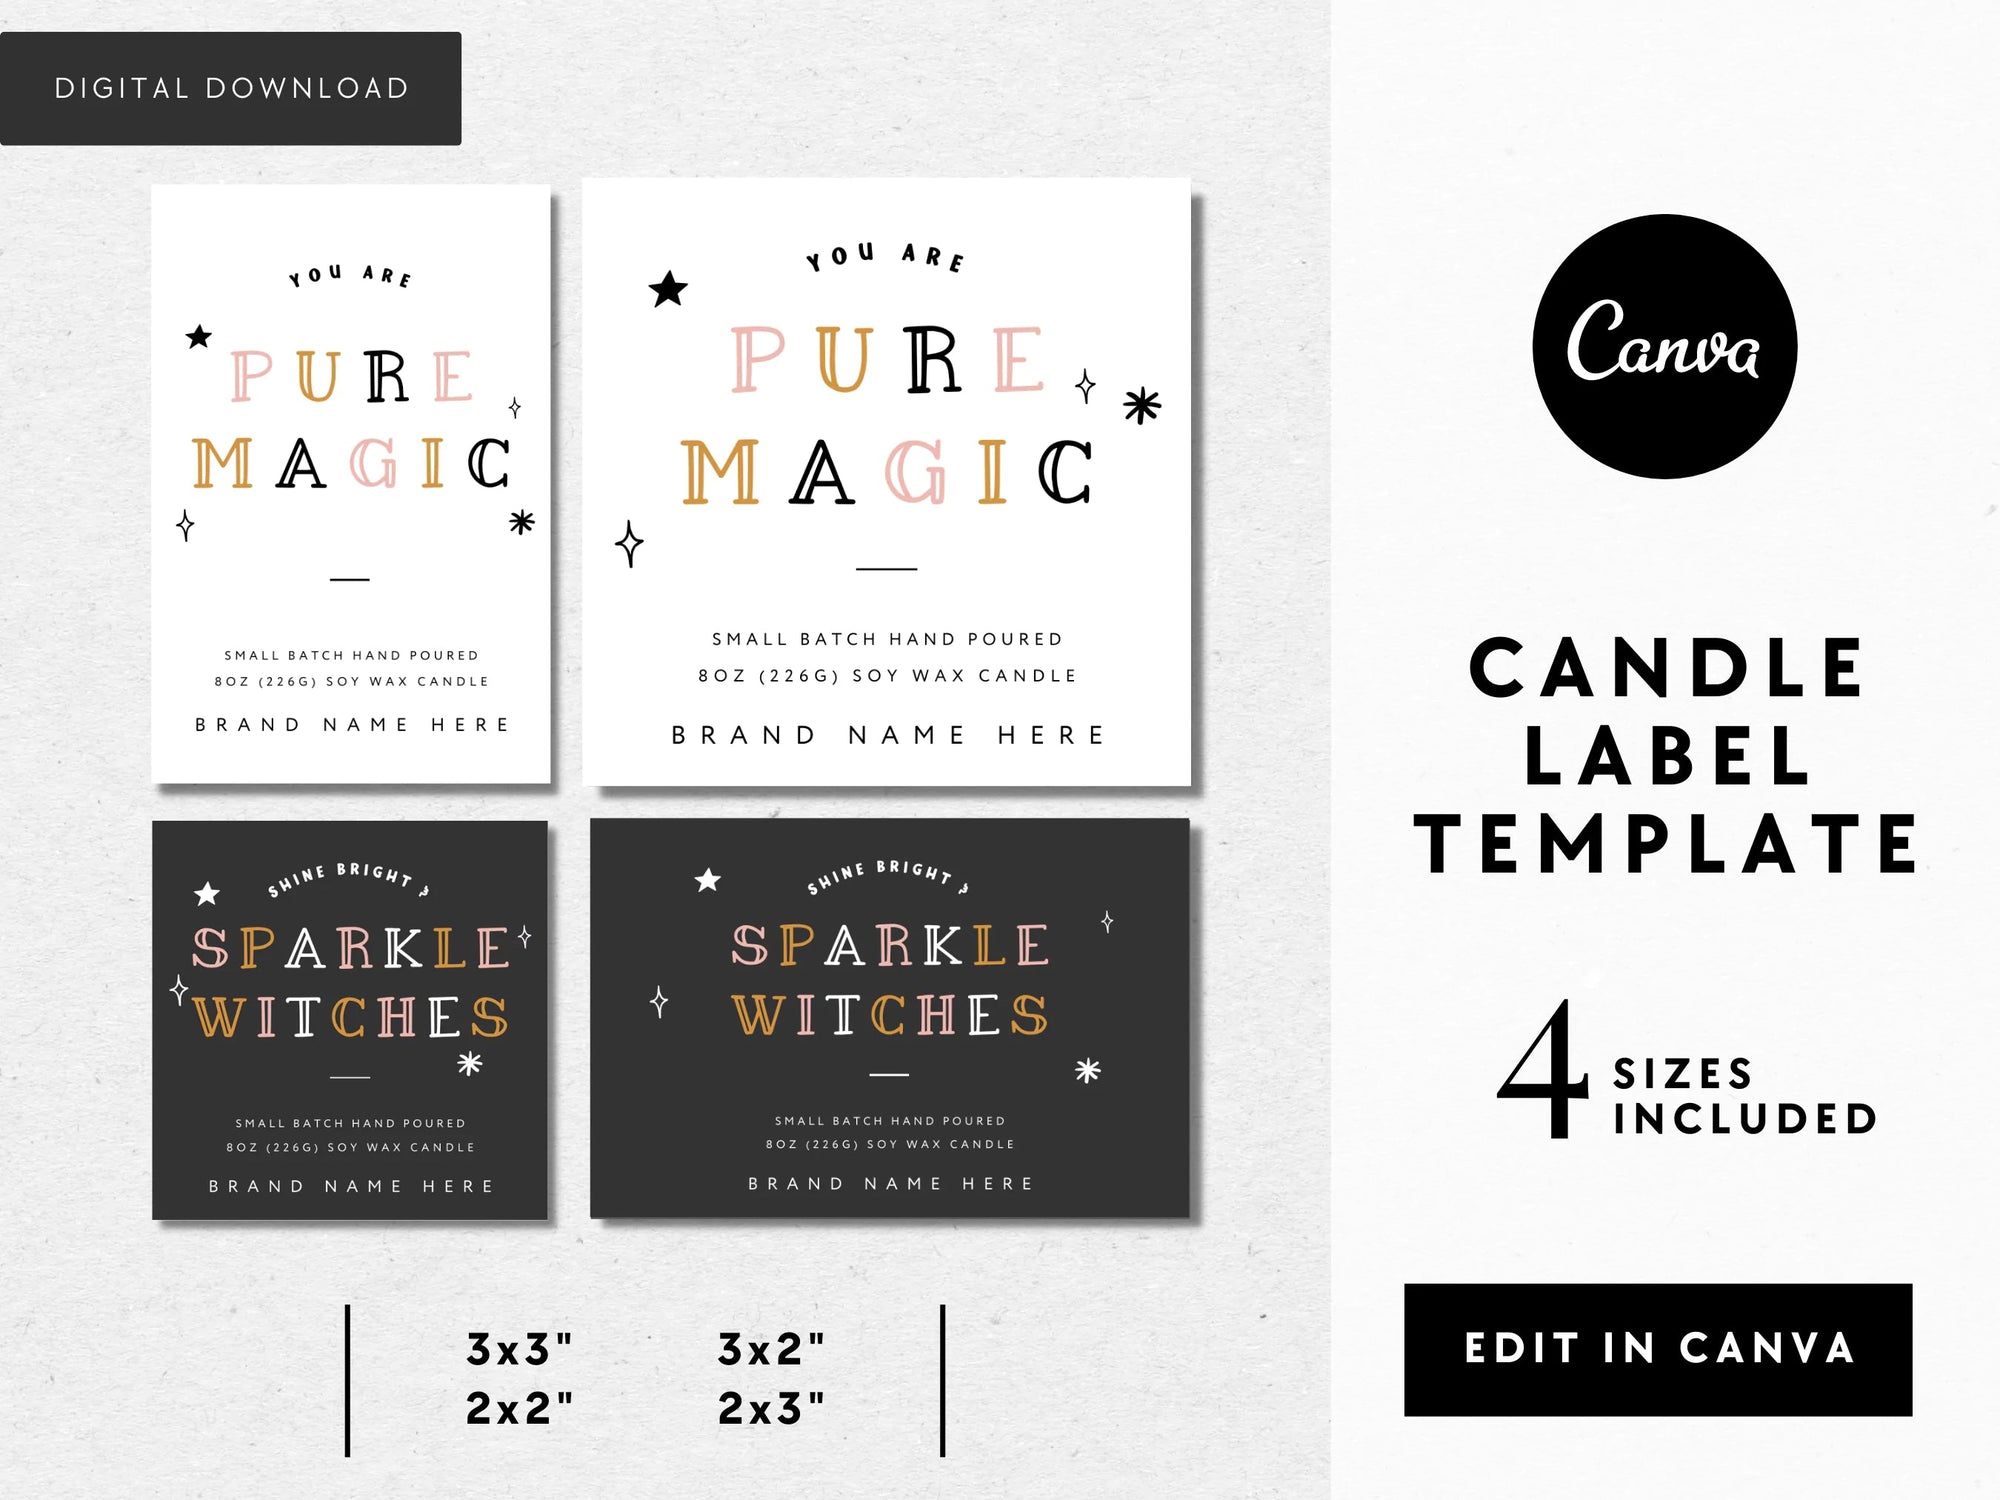 Cute Pastel Halloween Candle Label Canva Template - Trendy Fox Studio